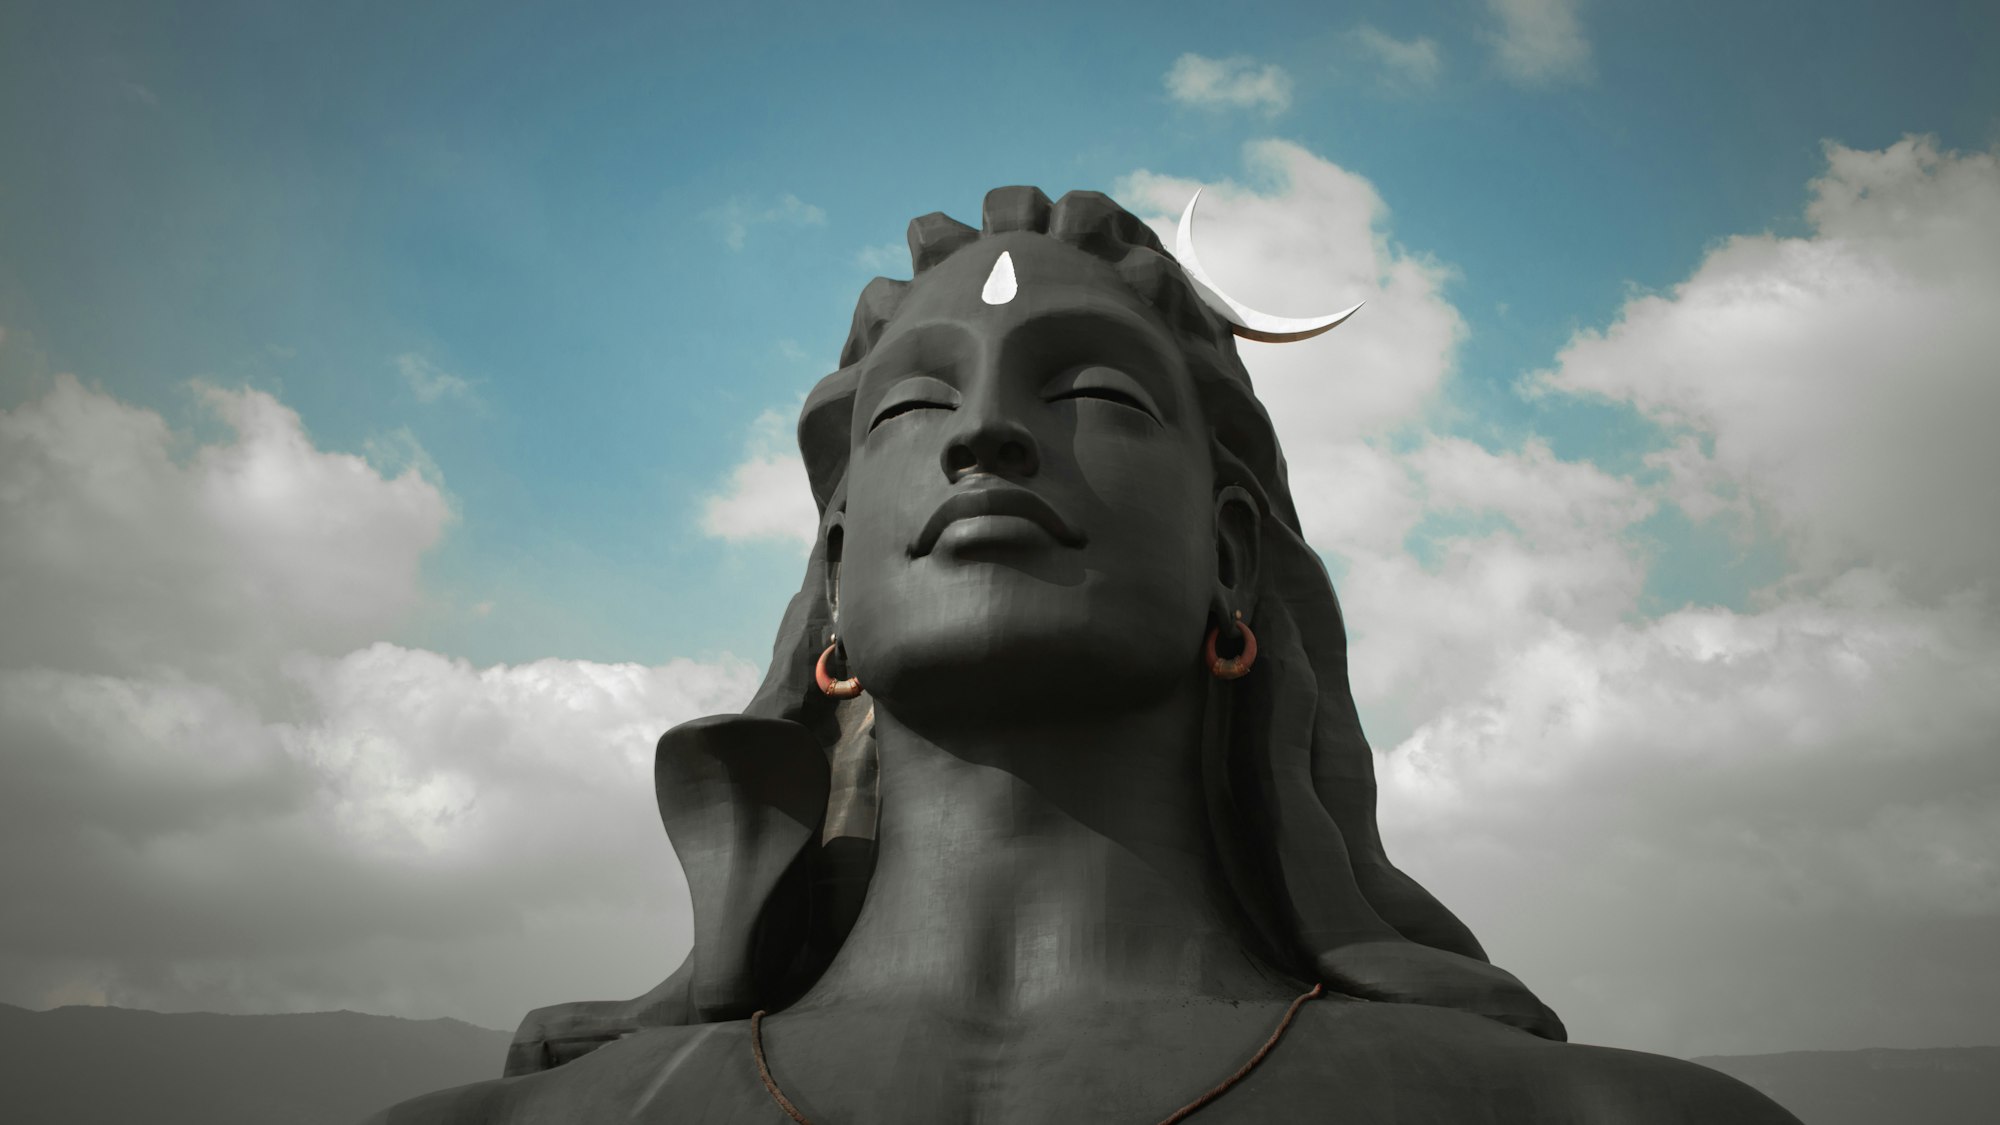 Lord Shiva at Isha Yoga Center, Coimbatore, India